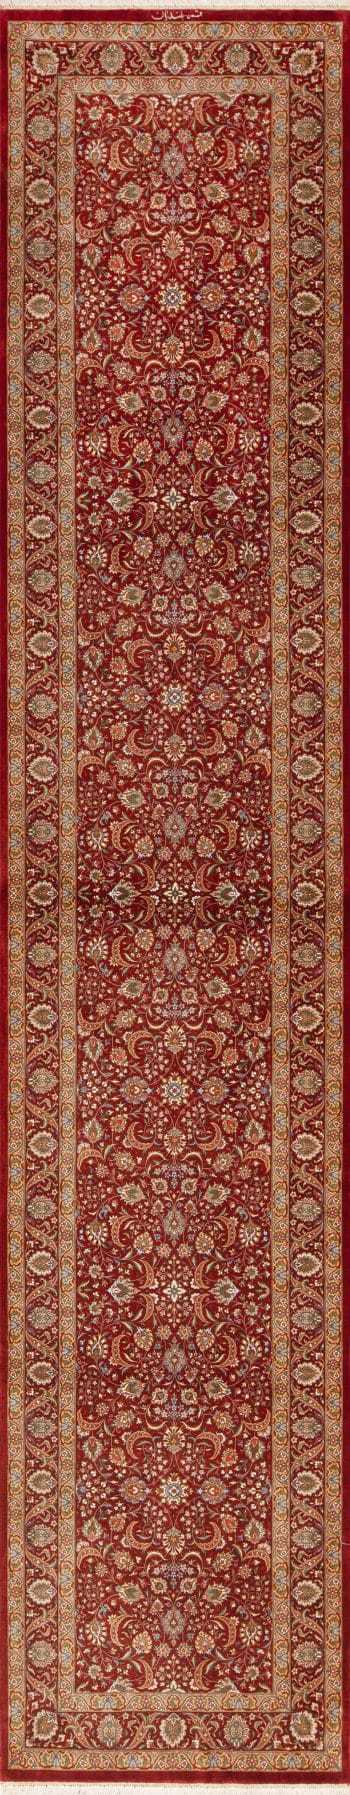 Red Fine Floral Luxurious Vintage Persian Qum Silk Hallway Runner Rug 72787 by Nazmiyal Antique Rugs